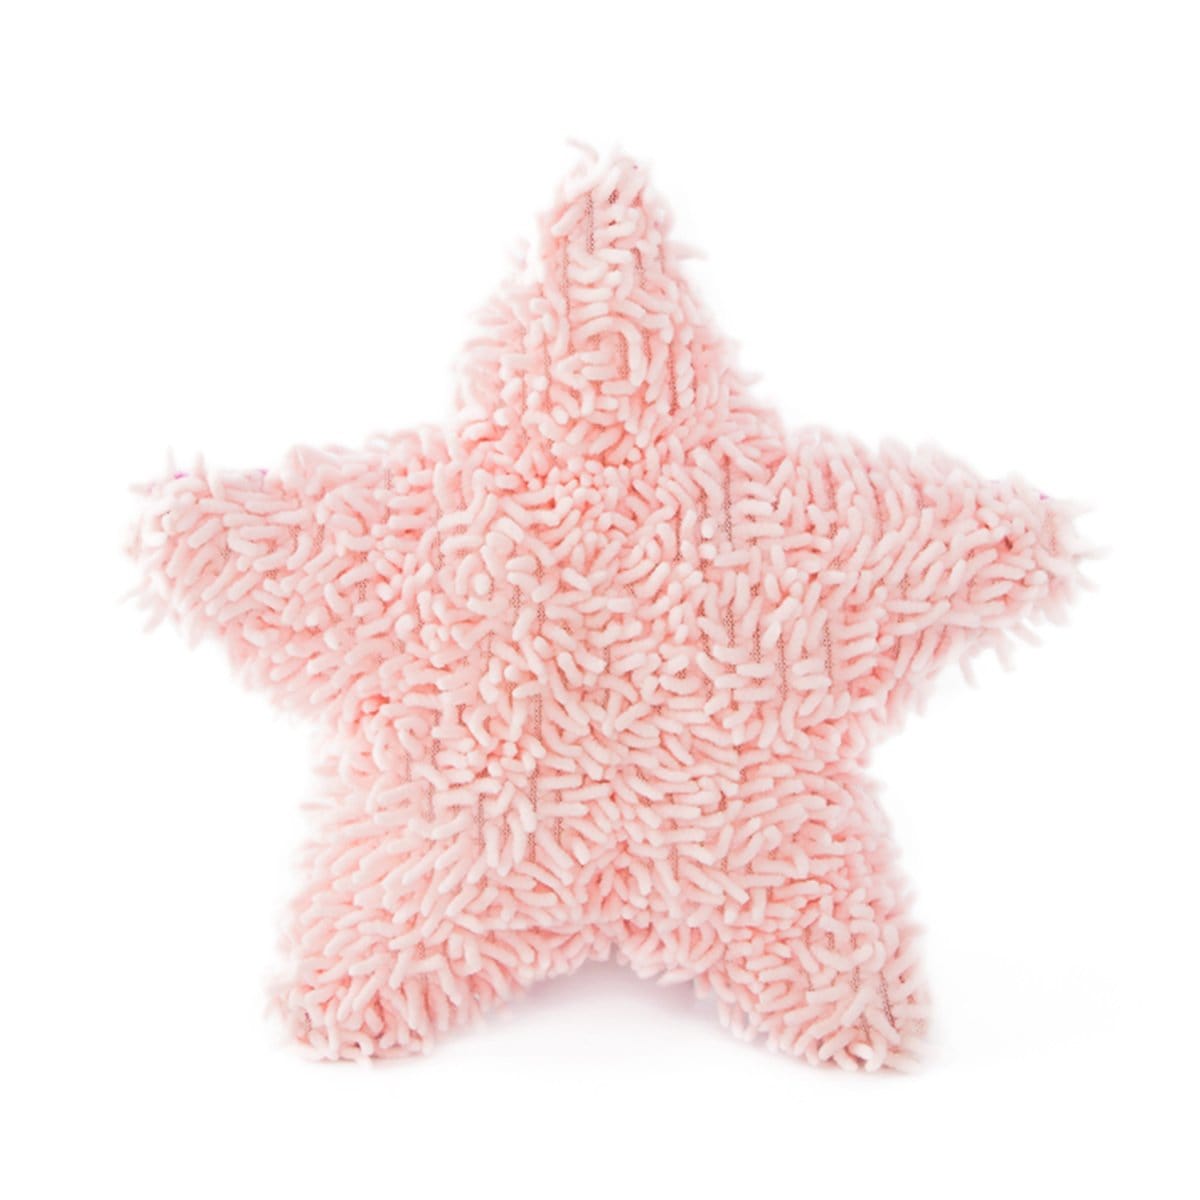 Zippy Paws Starla the Starfish Dog Toys